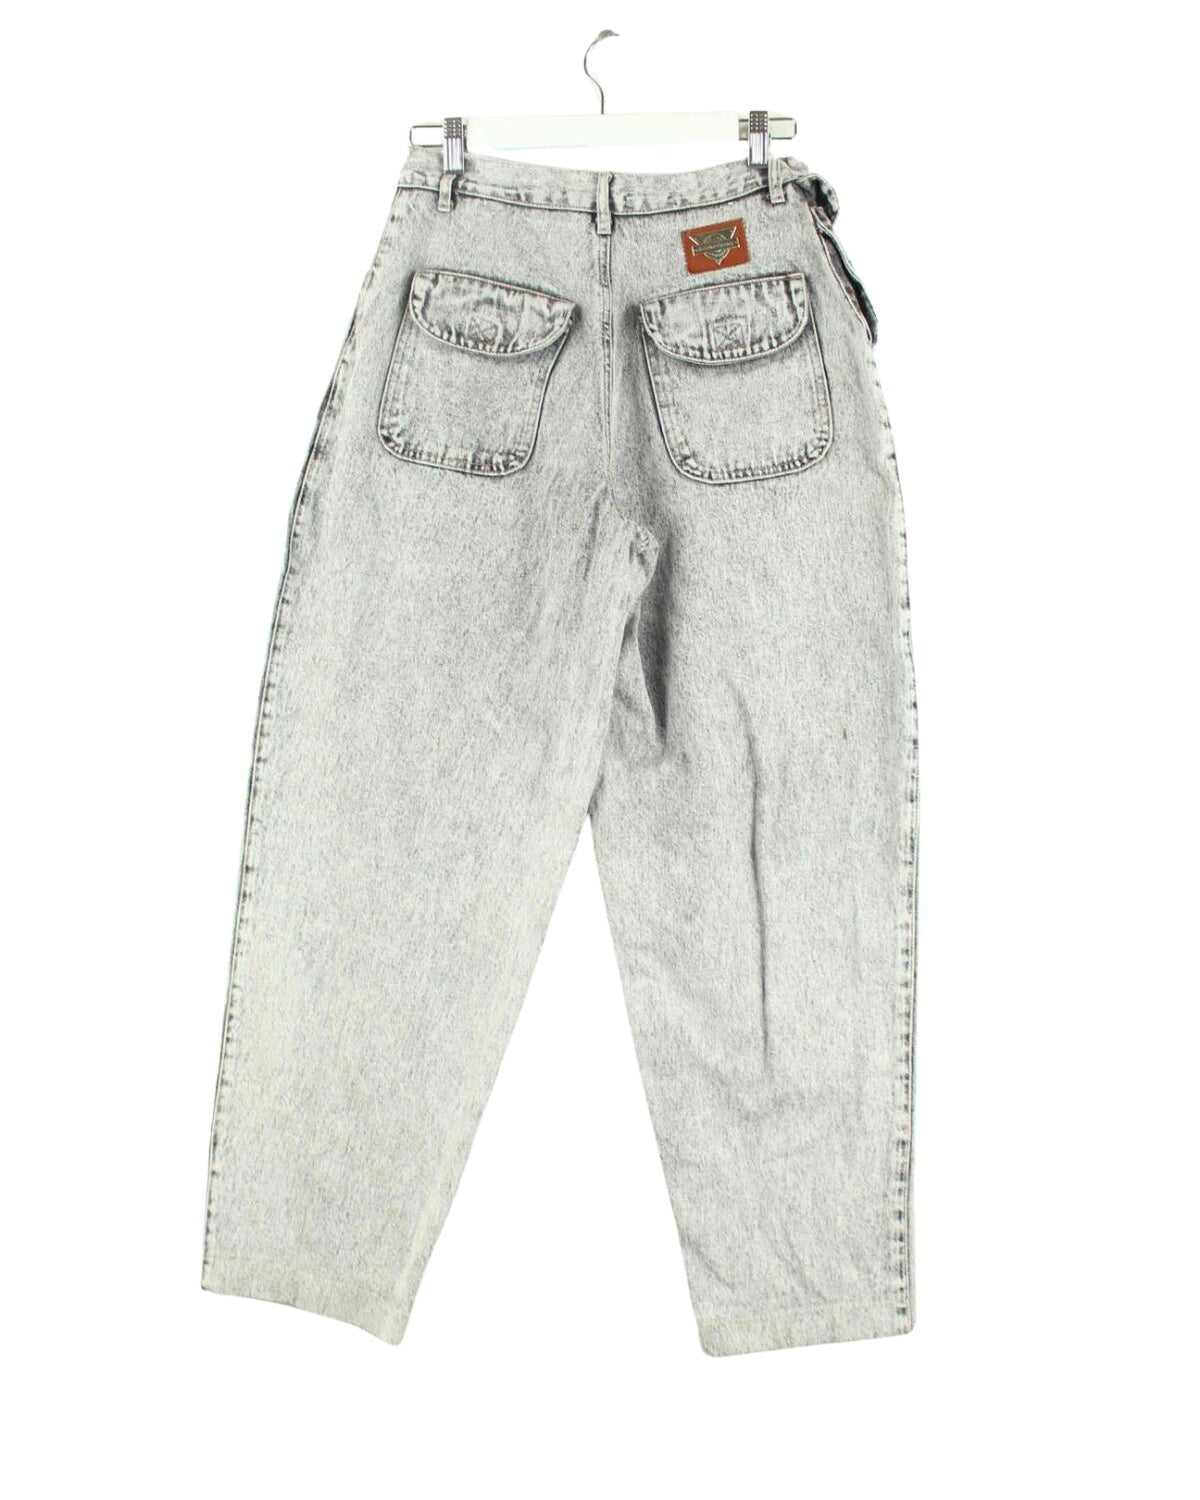 Vintage Damen 90s Washed Jeans Grau W28 L30 (back image)